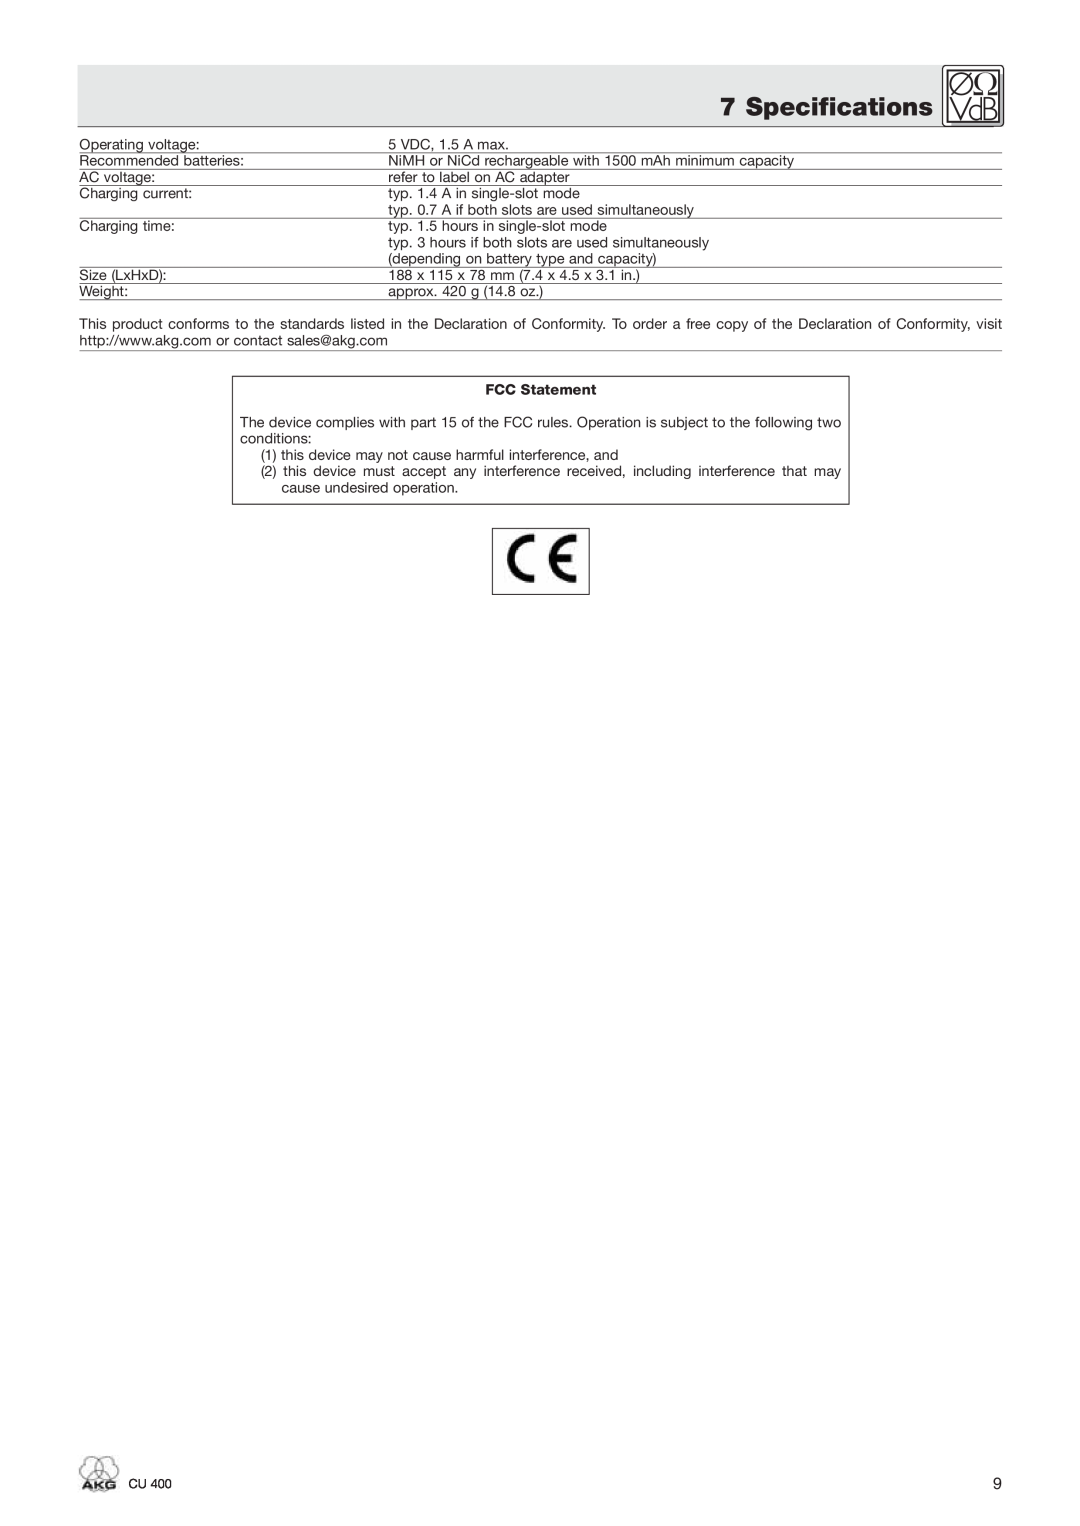 AKG Acoustics CU 400 manual Specifications, FCC Statement 